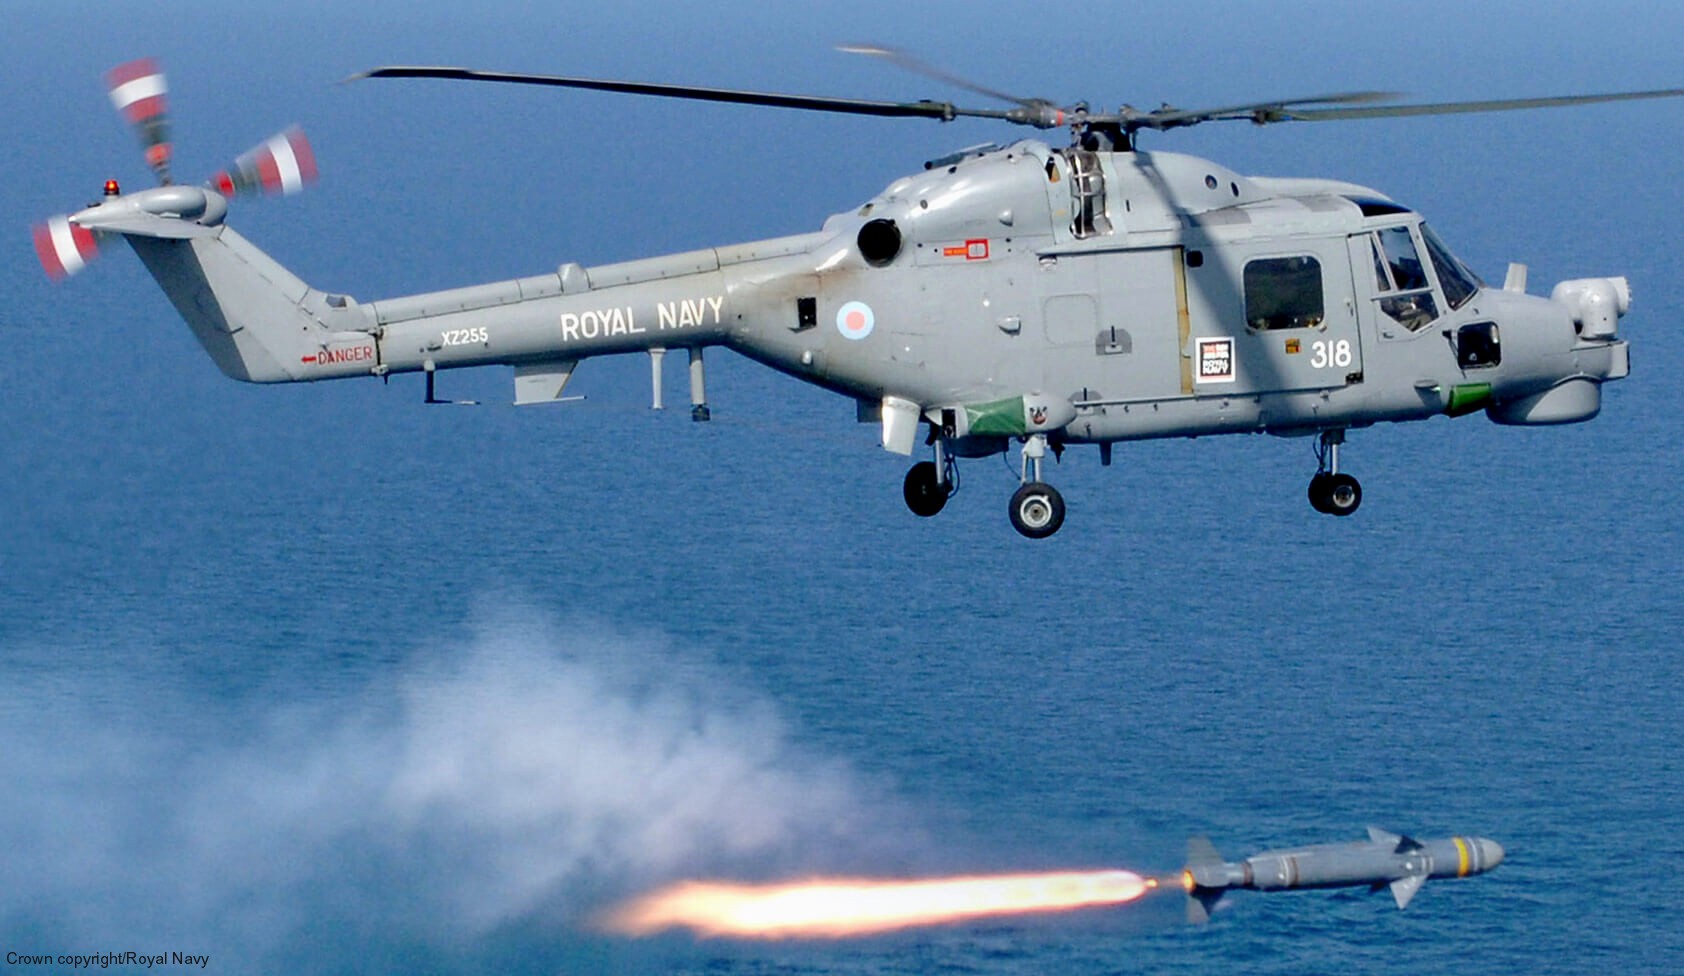 sea skua anti-ship missile agm asm bae mbda royal navy lynx helicopter 03